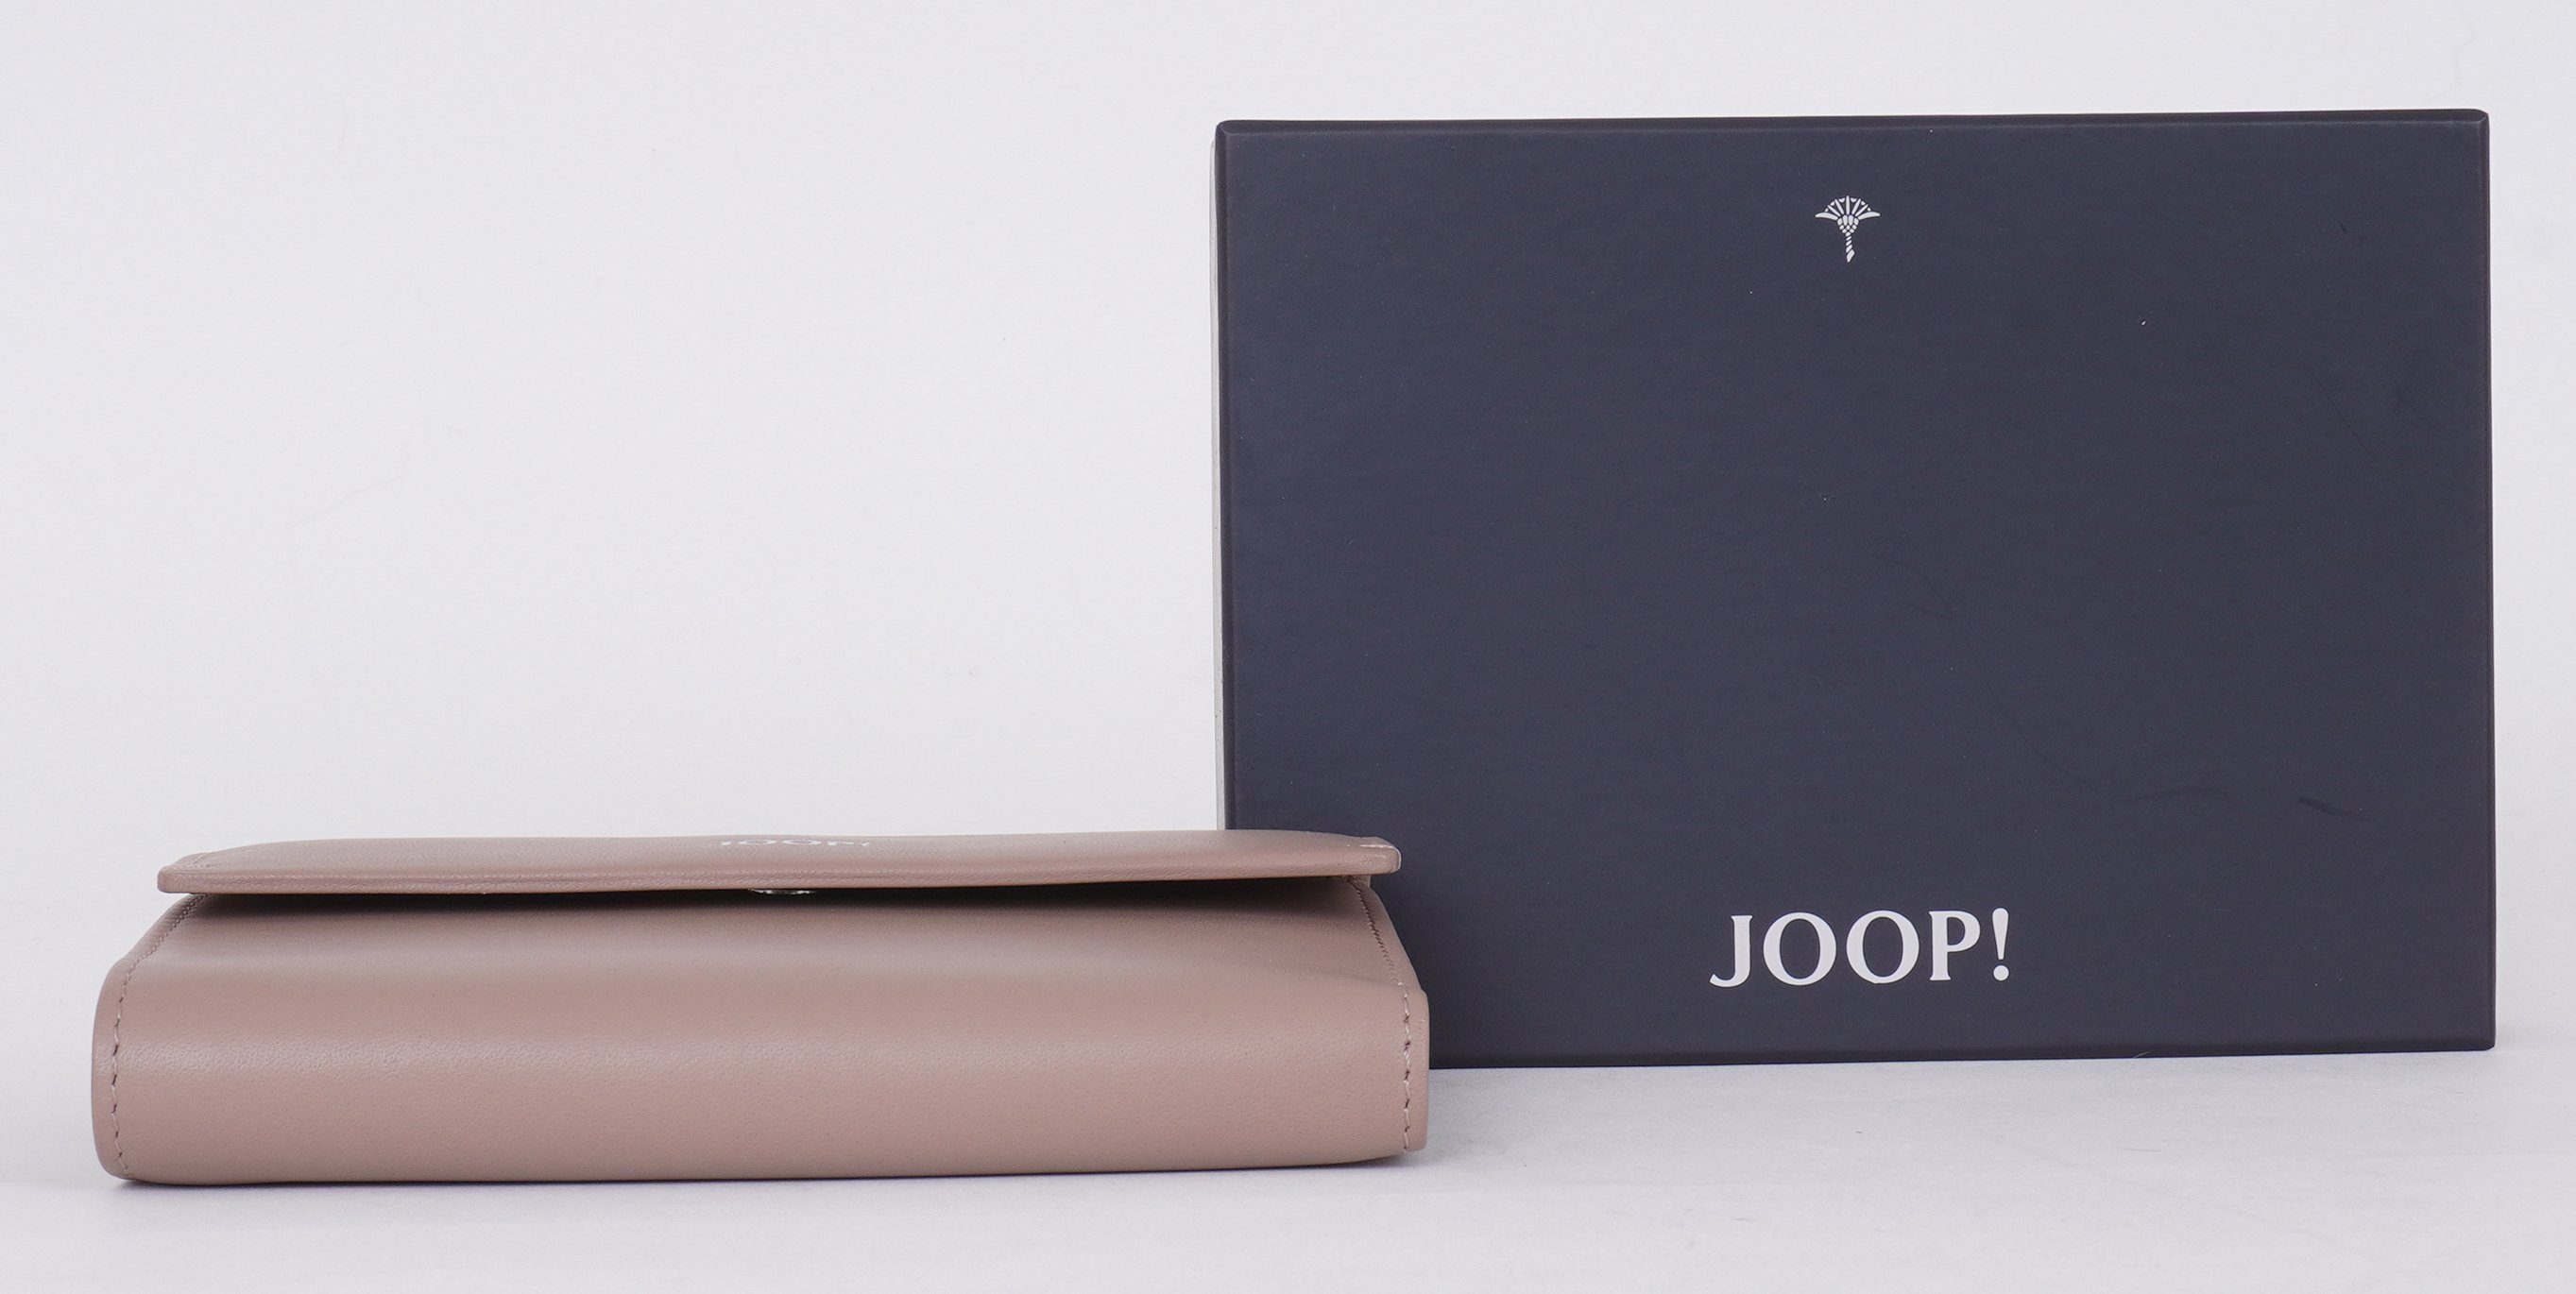 Joop! 1.0 purse mh10f, rosa cosma in Geldbörse sofisticato schlichtem Design